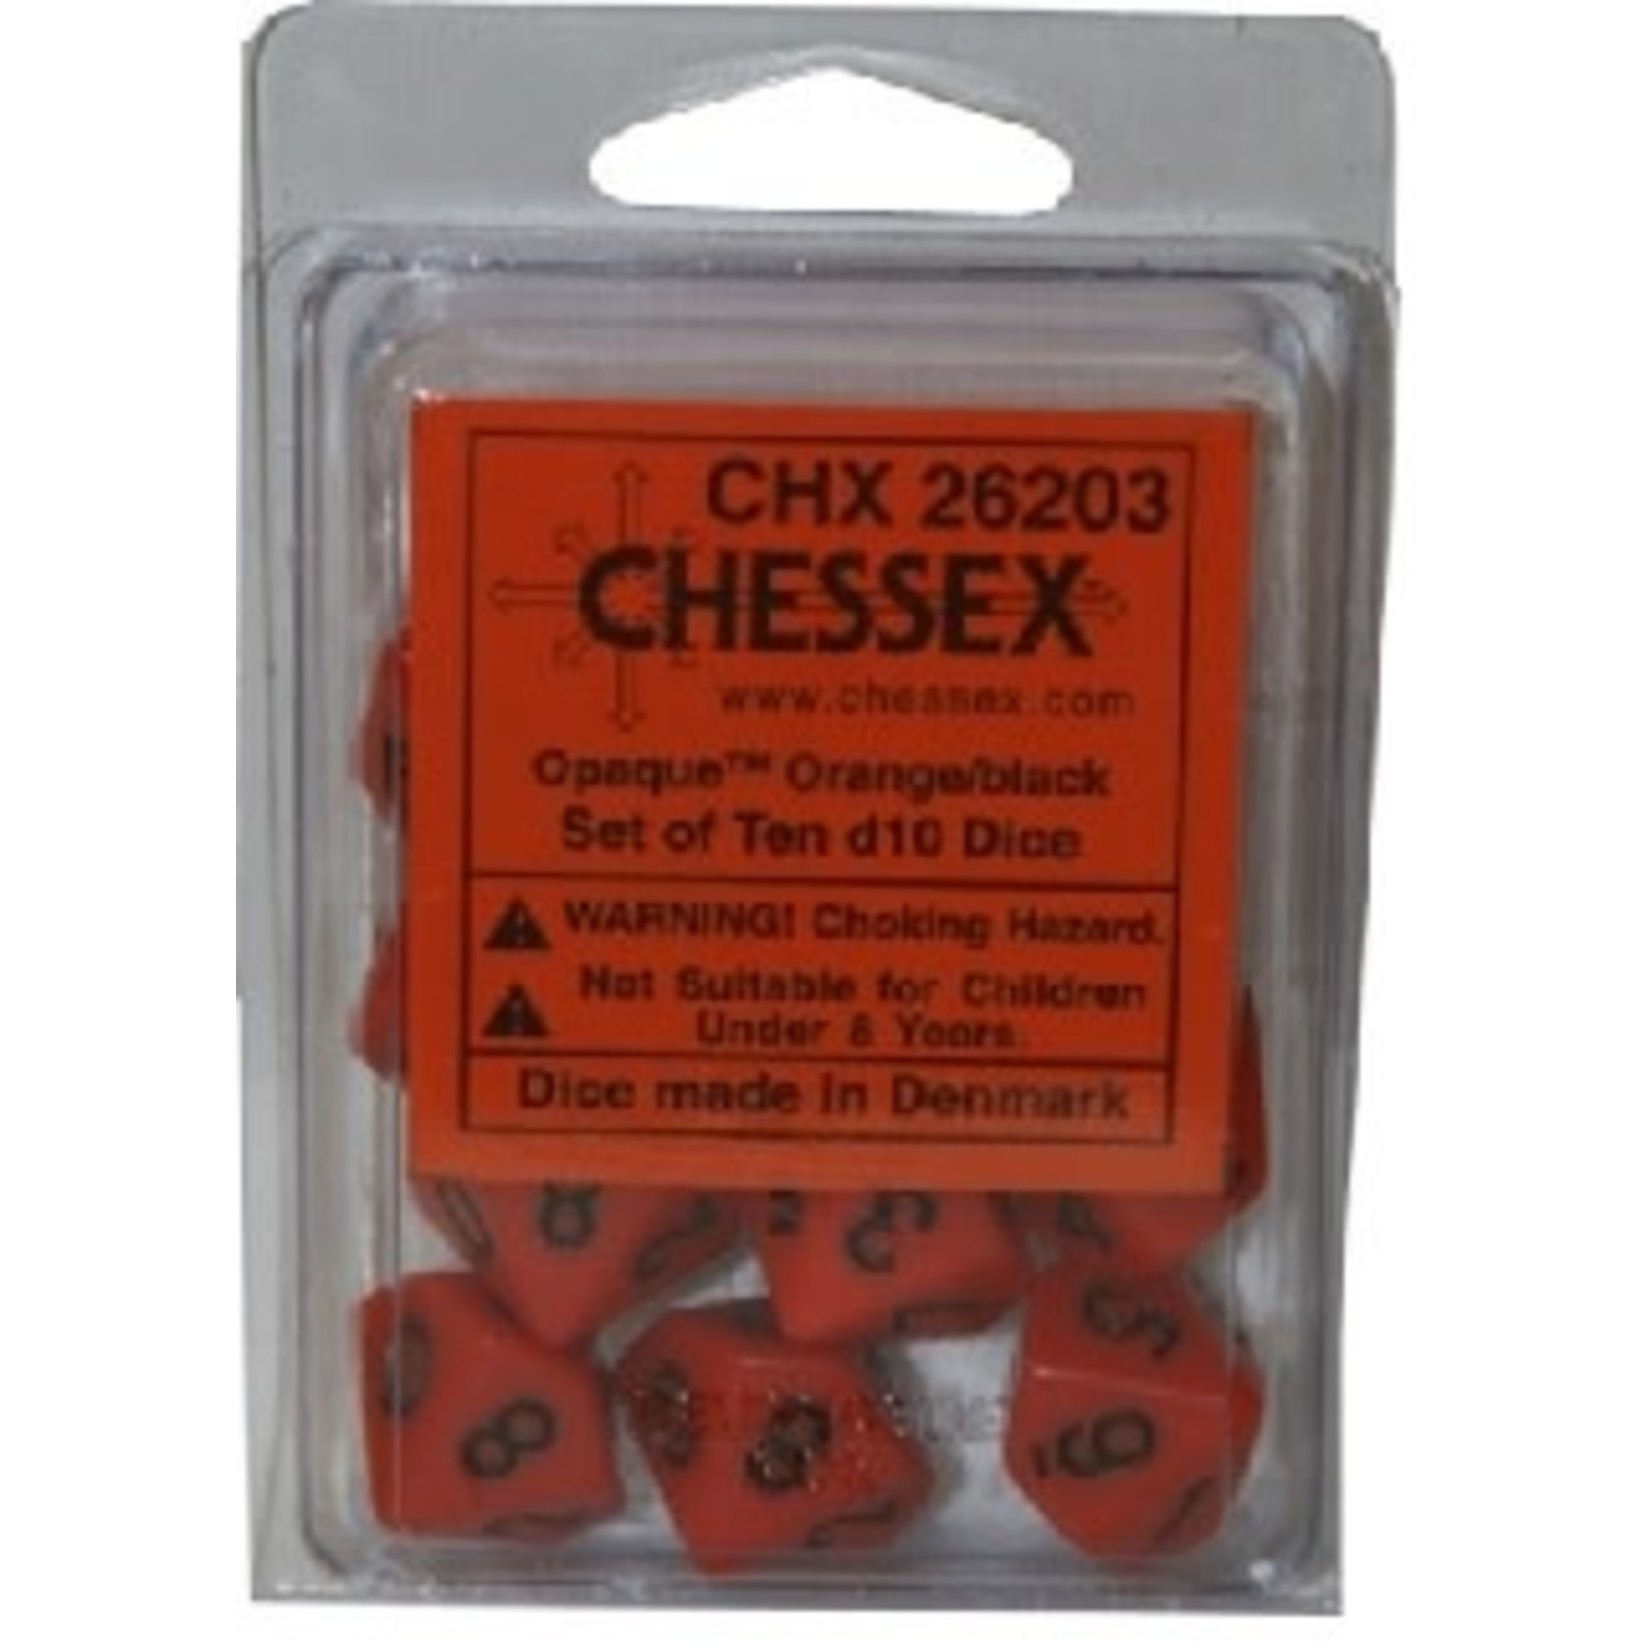 chessex Chessex Dice Opaque 10D10 Orange/Black